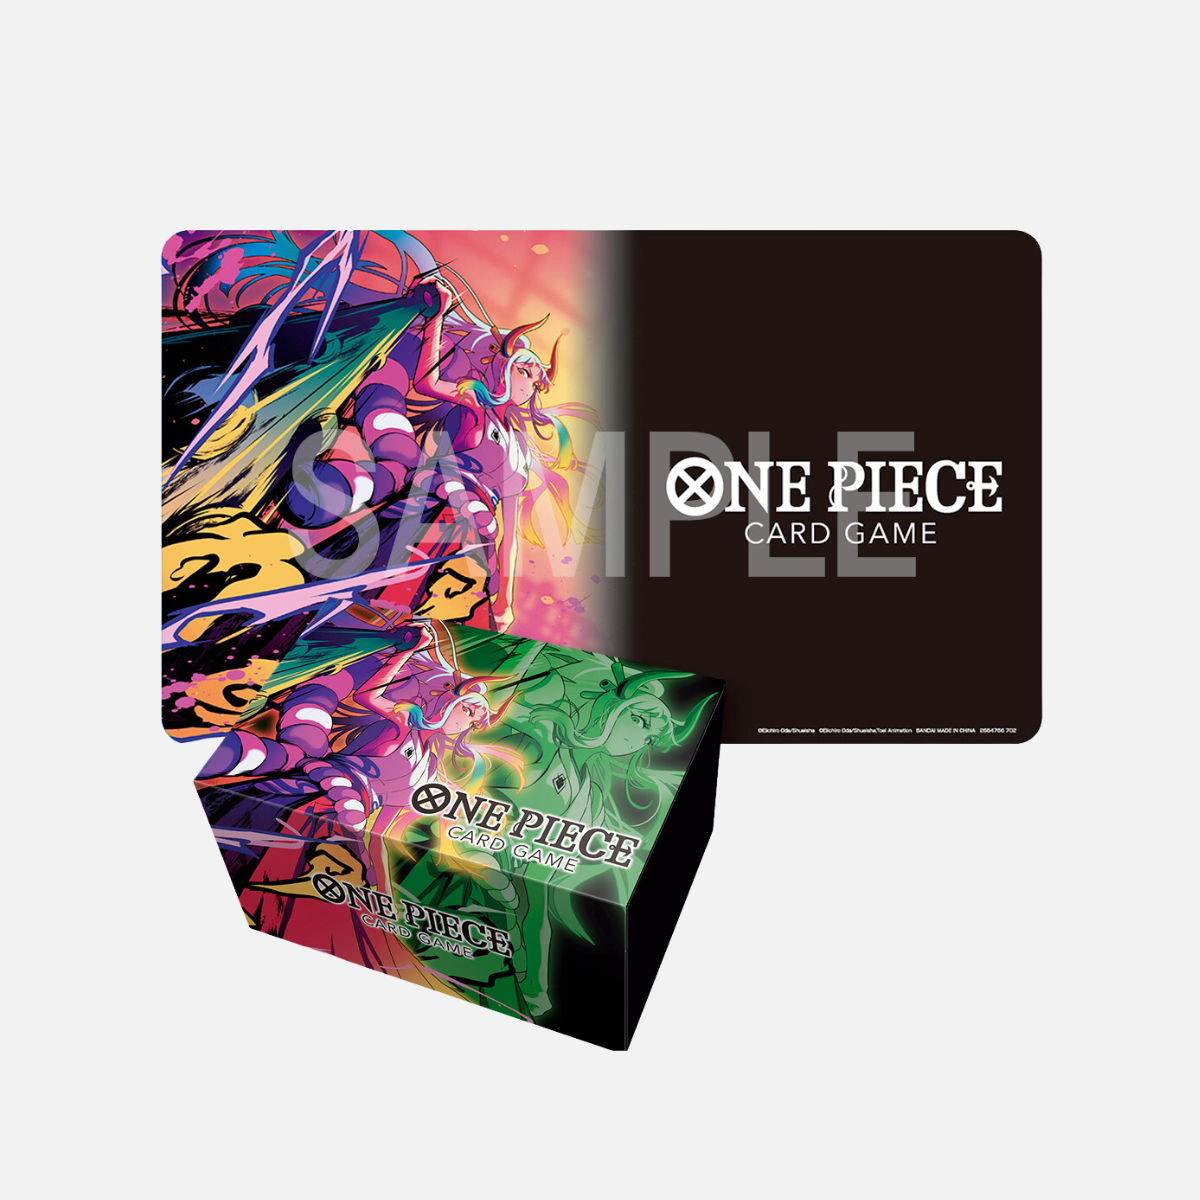 One Piece card game Playmat and Storage Box Yamato